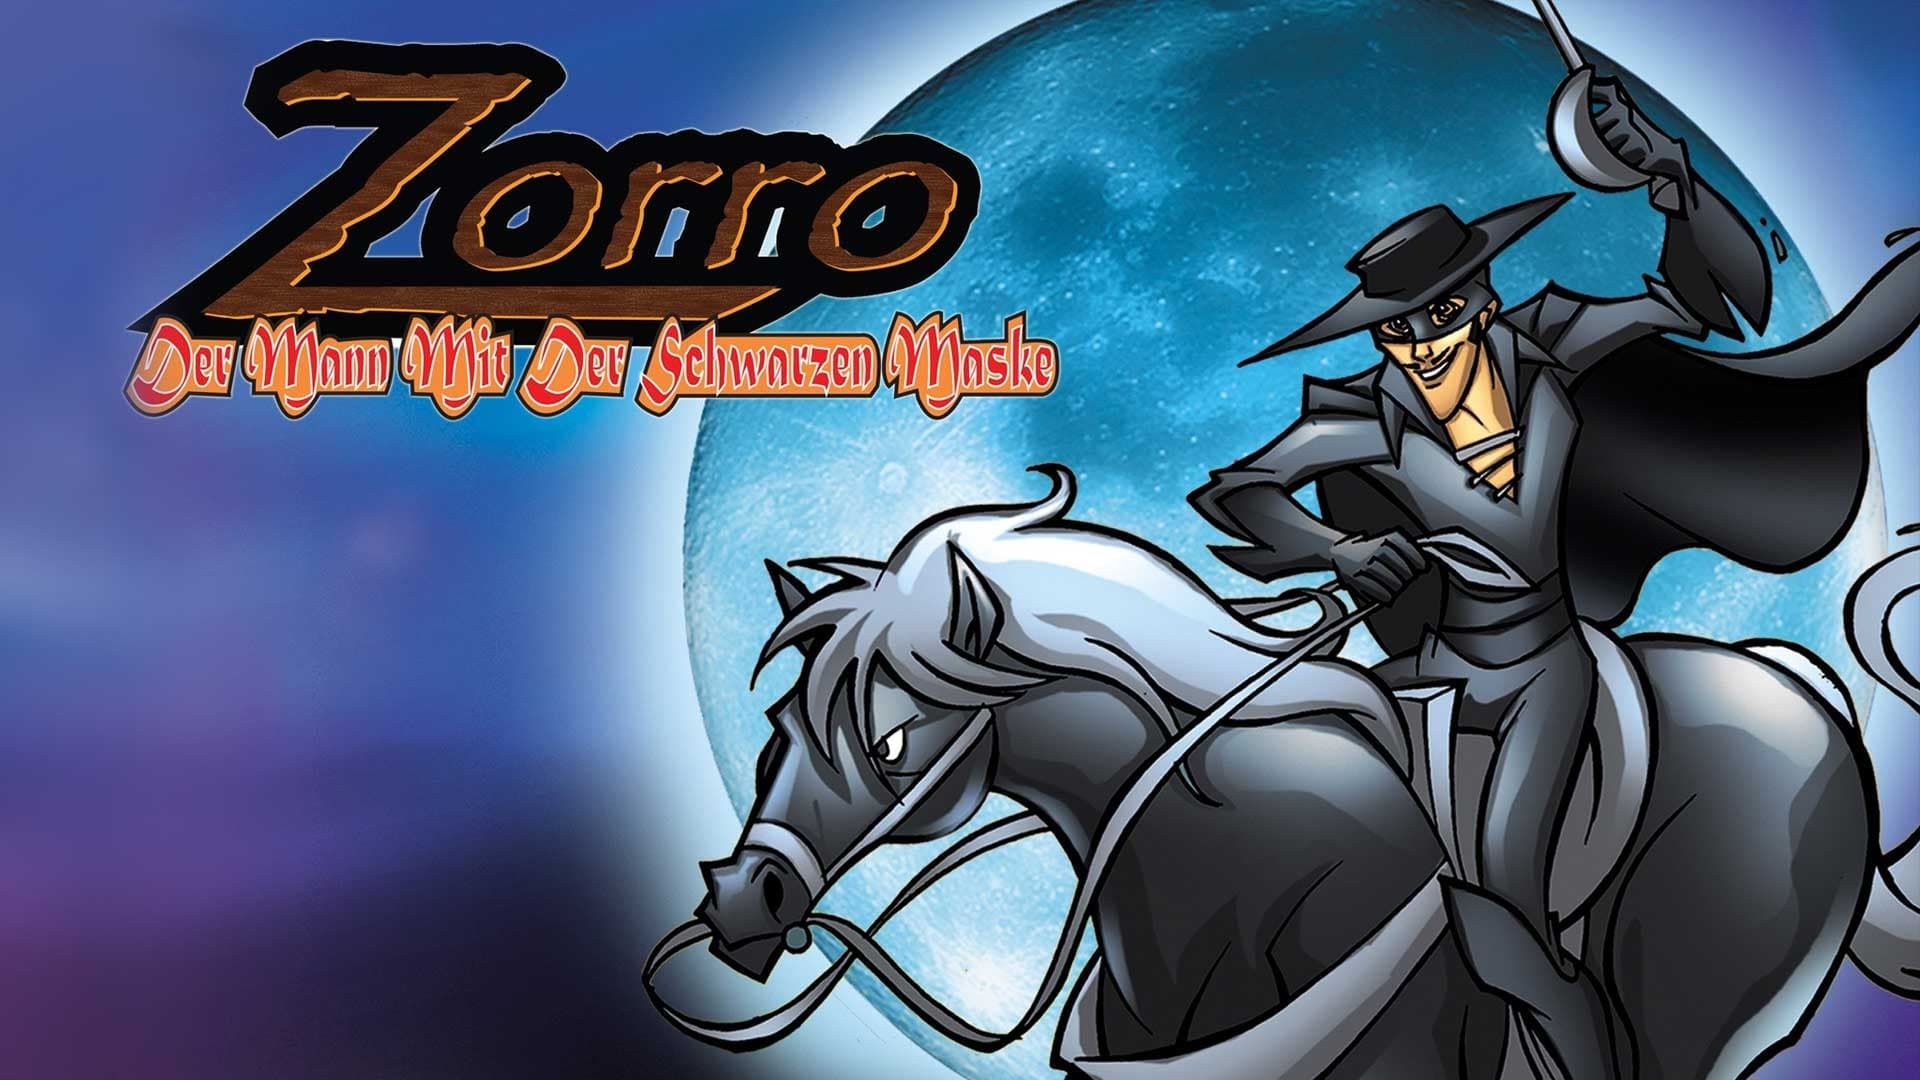 Cubierta de The Amazing Zorro